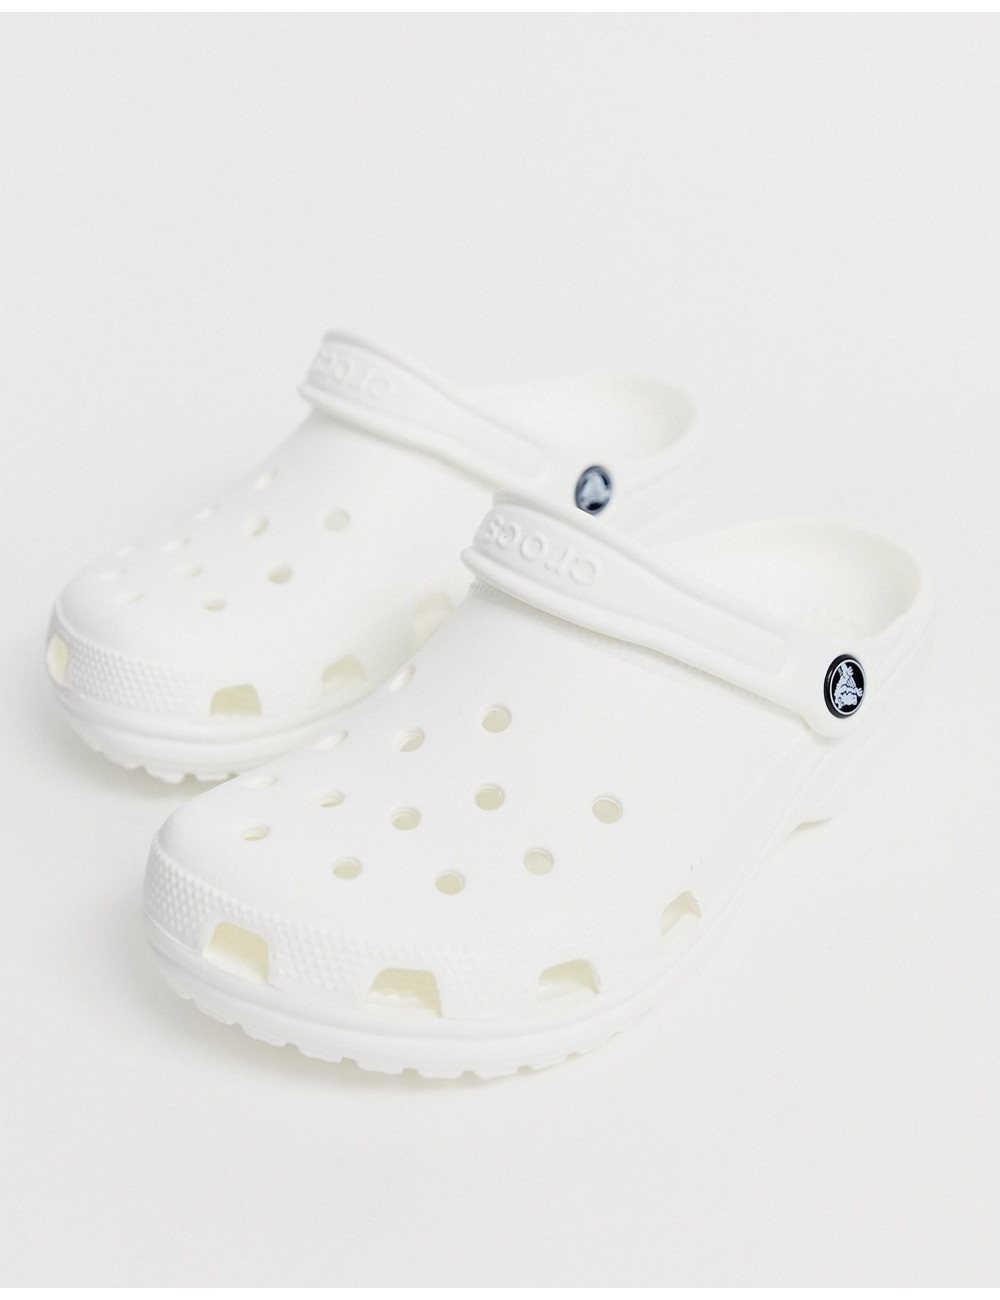 Crocs classic shoe in white